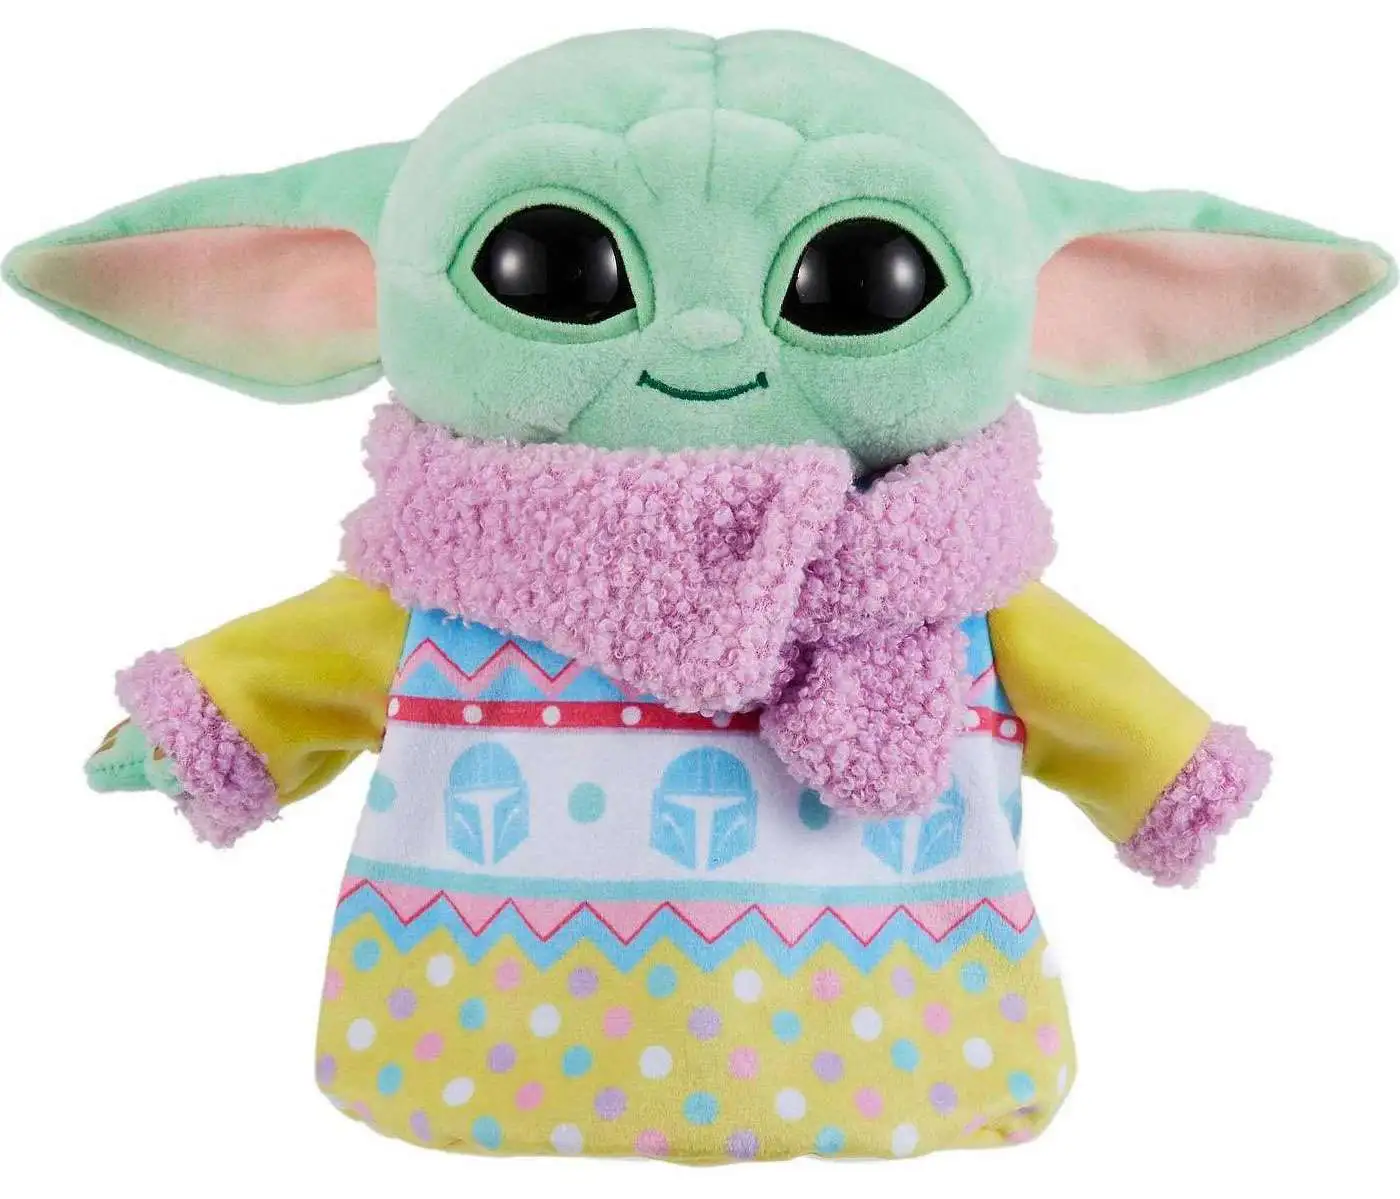 Star Wars Baby Yoda The Child 11 inch Plush Toy Mandalorian Mattel Disney 